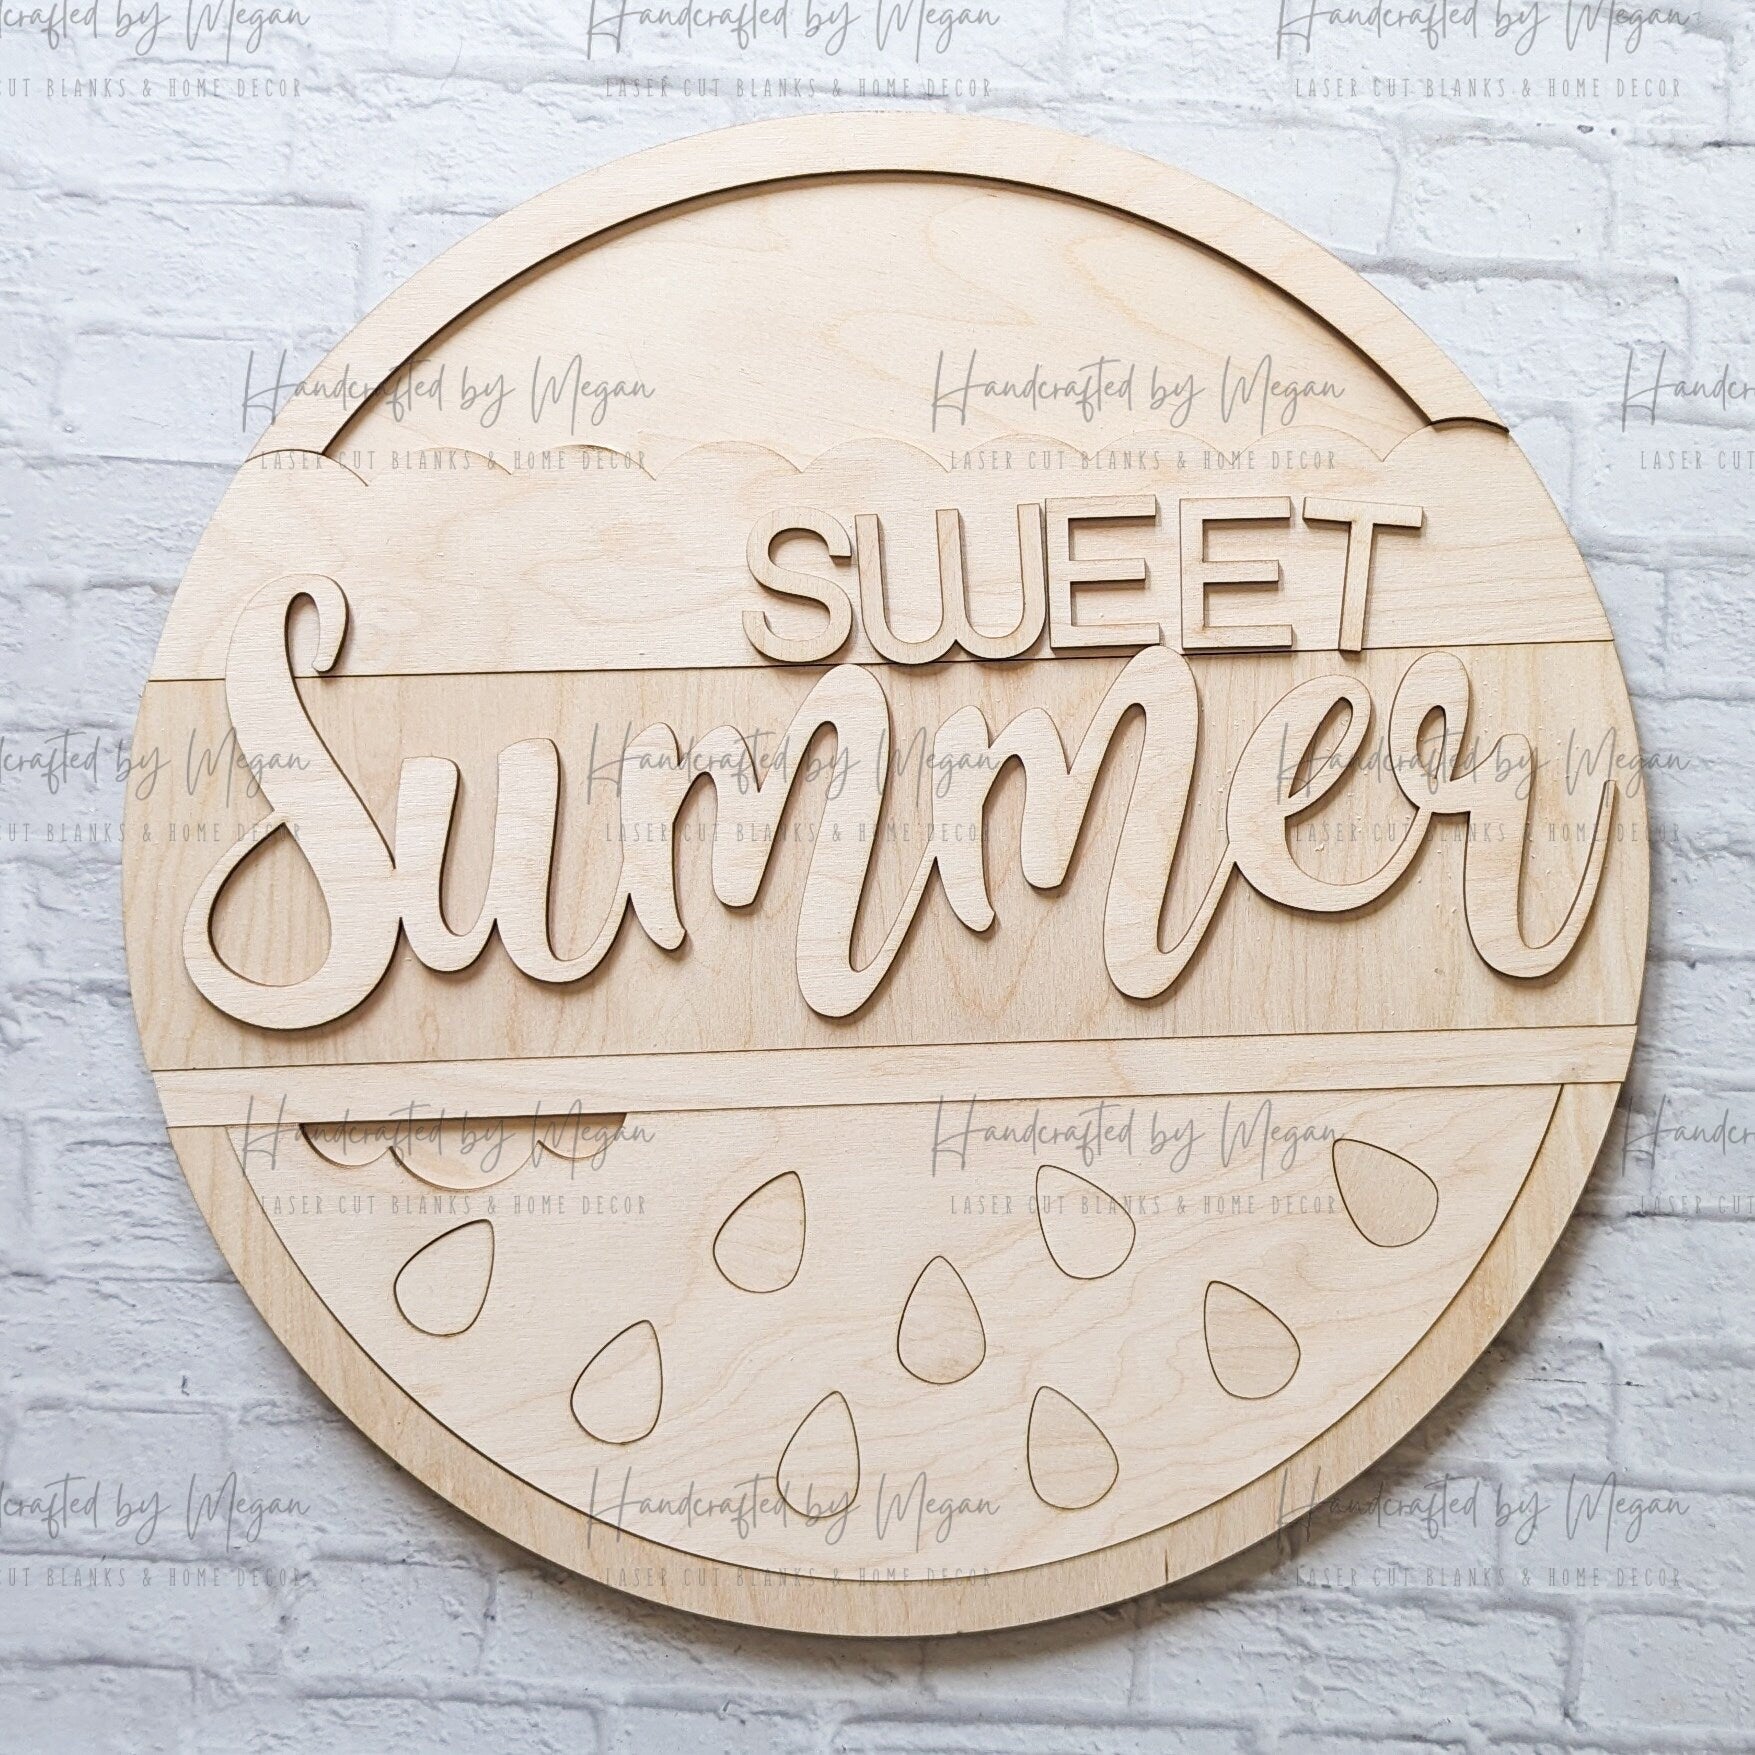 Sweet Summer Watermelon Door Hanger- Unfinished Wood - Wooden Blanks- Wooden Shapes - laser cut shape - Paint Party- Kids Crafts